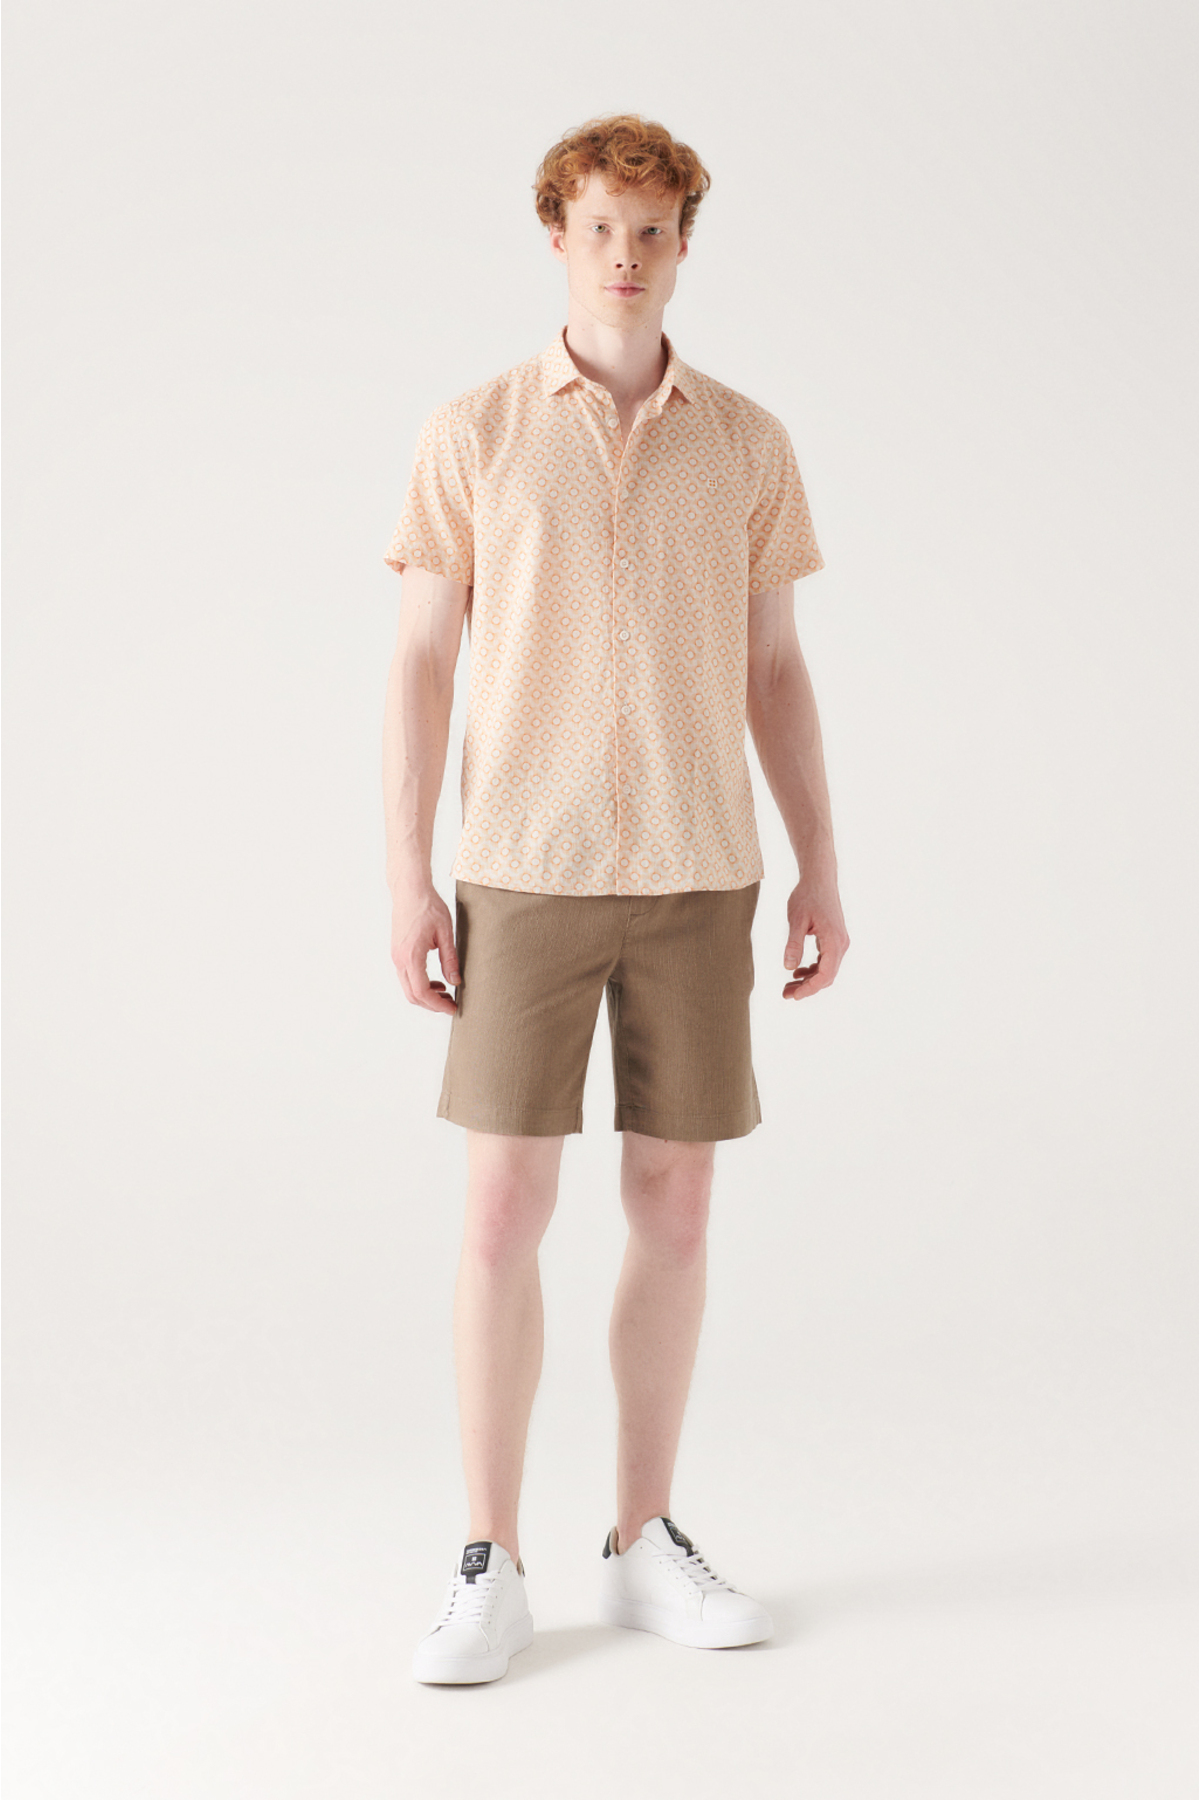 Avva Men's Khaki 100% Cotton Side Pocket Elastic Waist Linen Textured Relaxed Fit Comfortable Cut Shorts